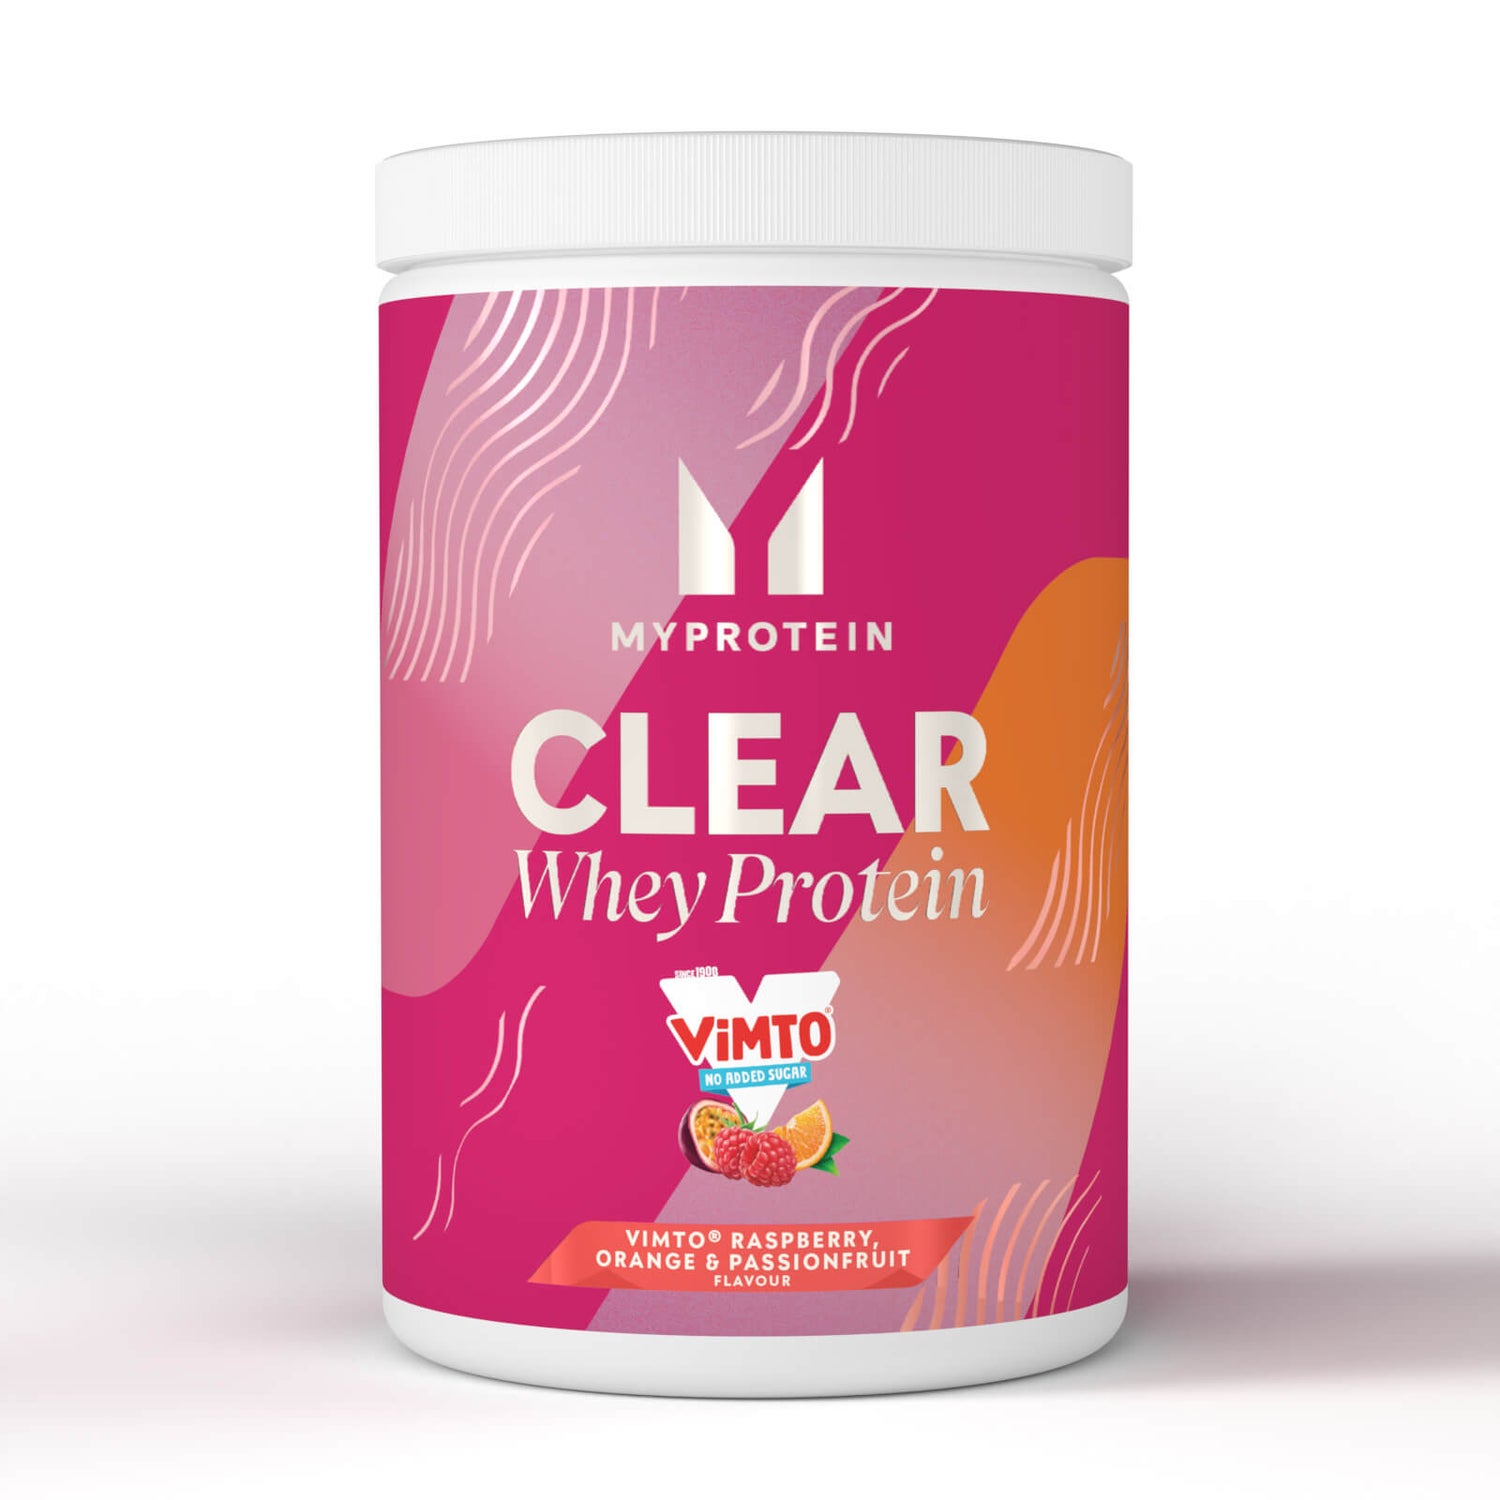 Clear Whey Isolate – Vimto ® Raspberry, Orange, Passionfruit